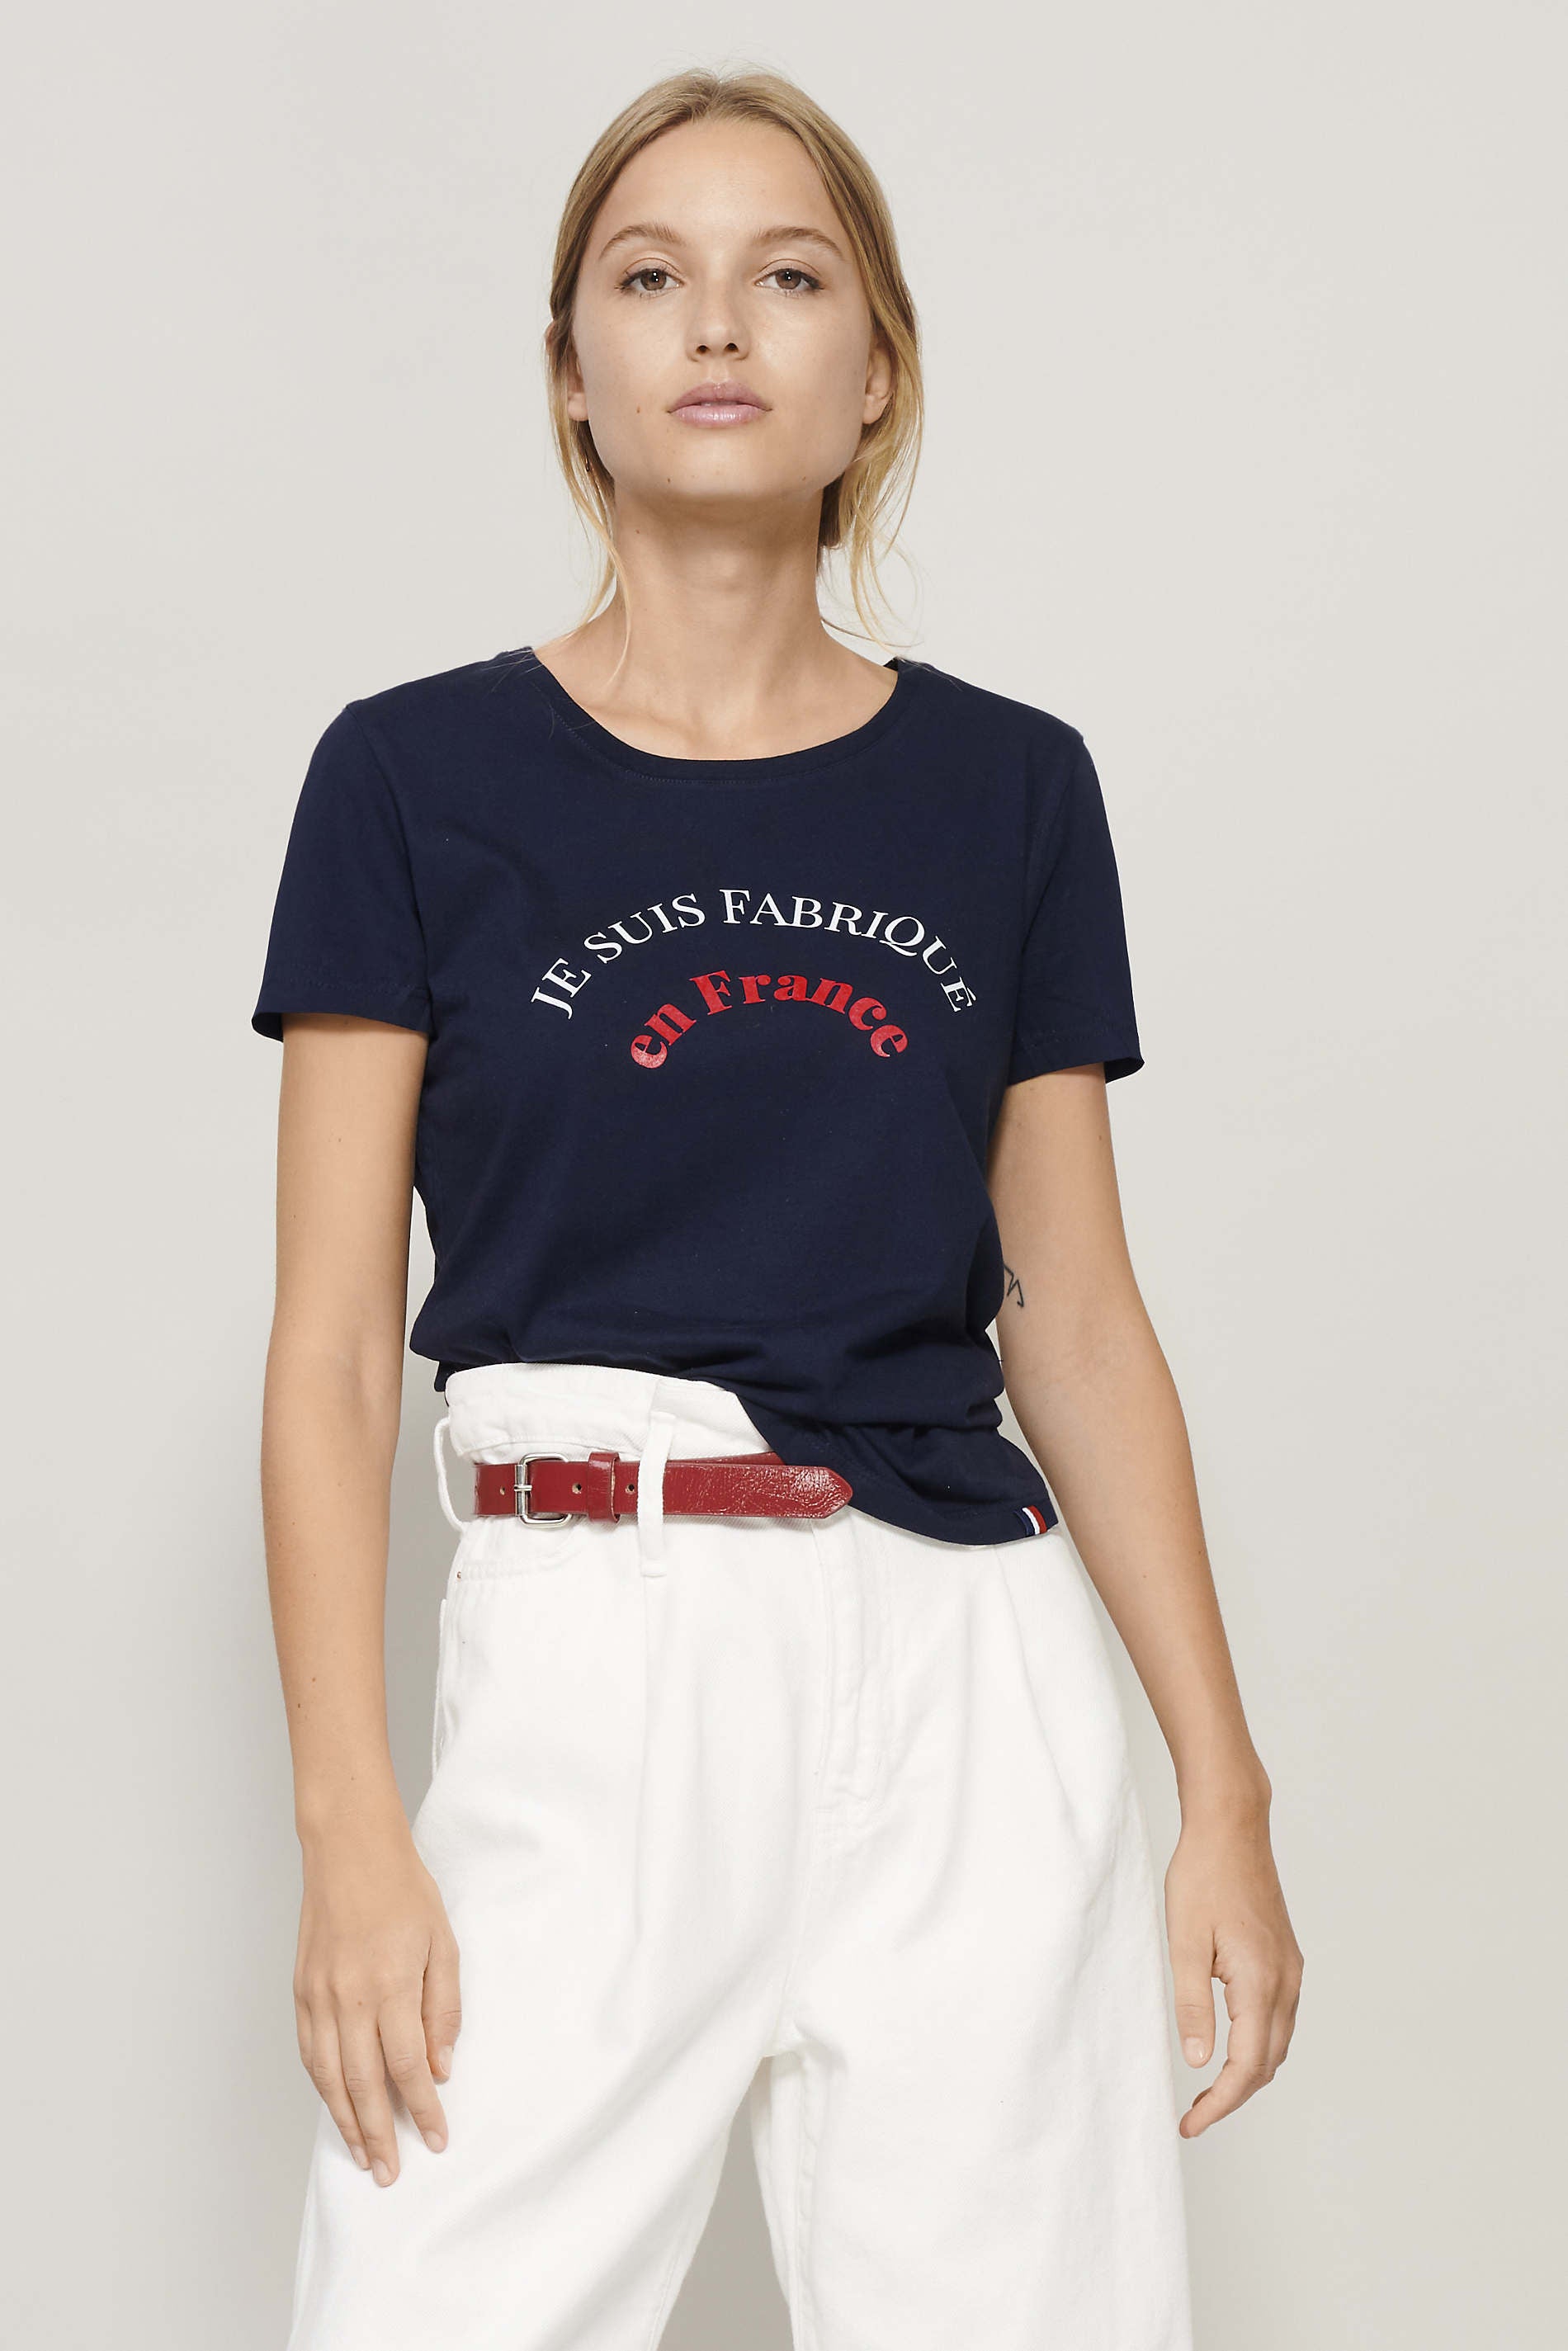 T-Shirt ATF Lola Made France Sol's T-shirt